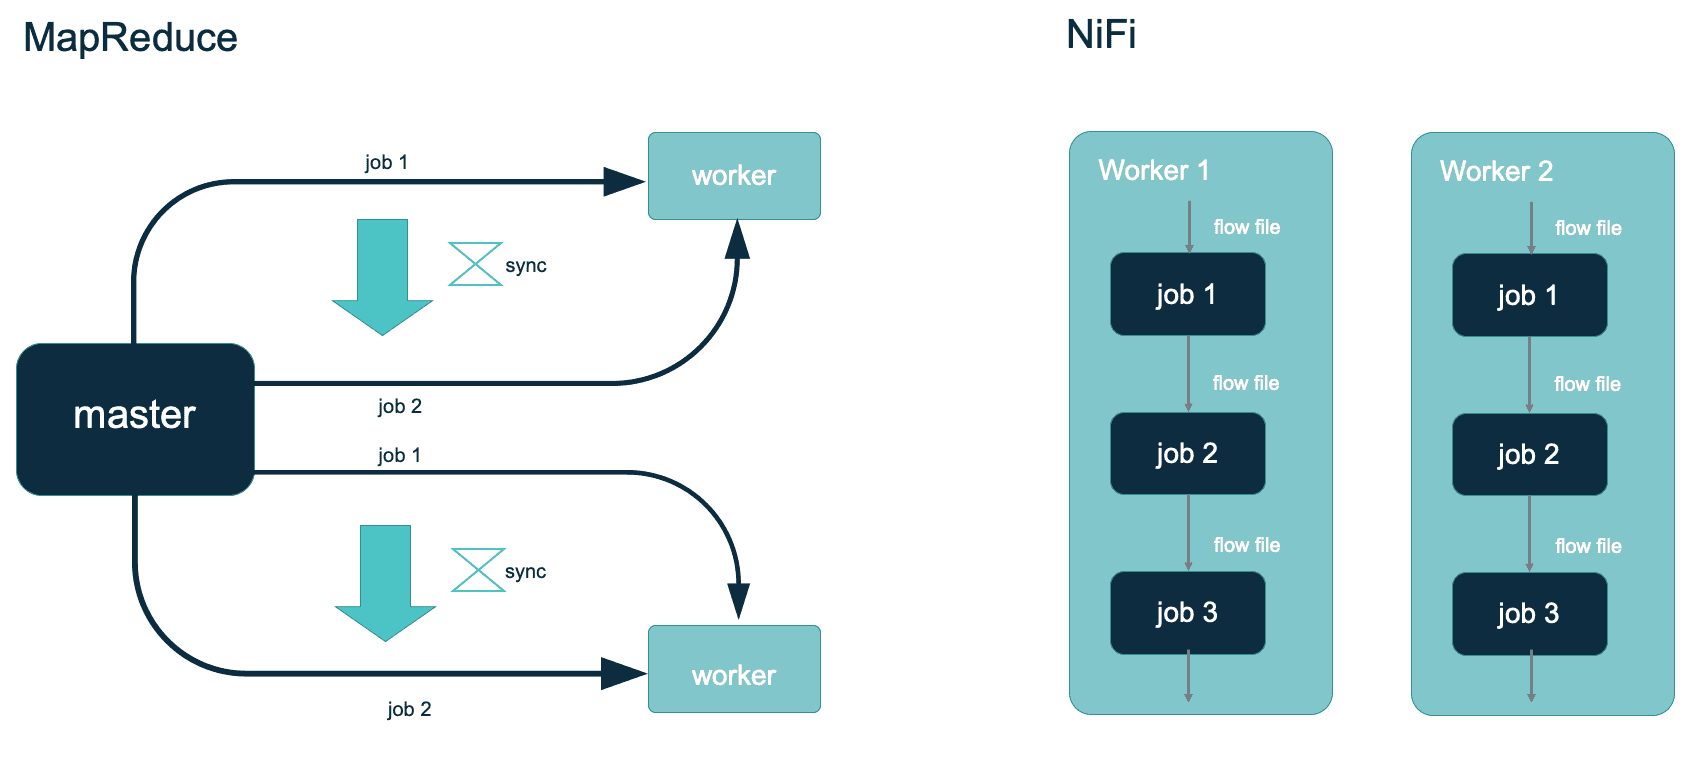 NiFiarchitecture-master-worker-getindata